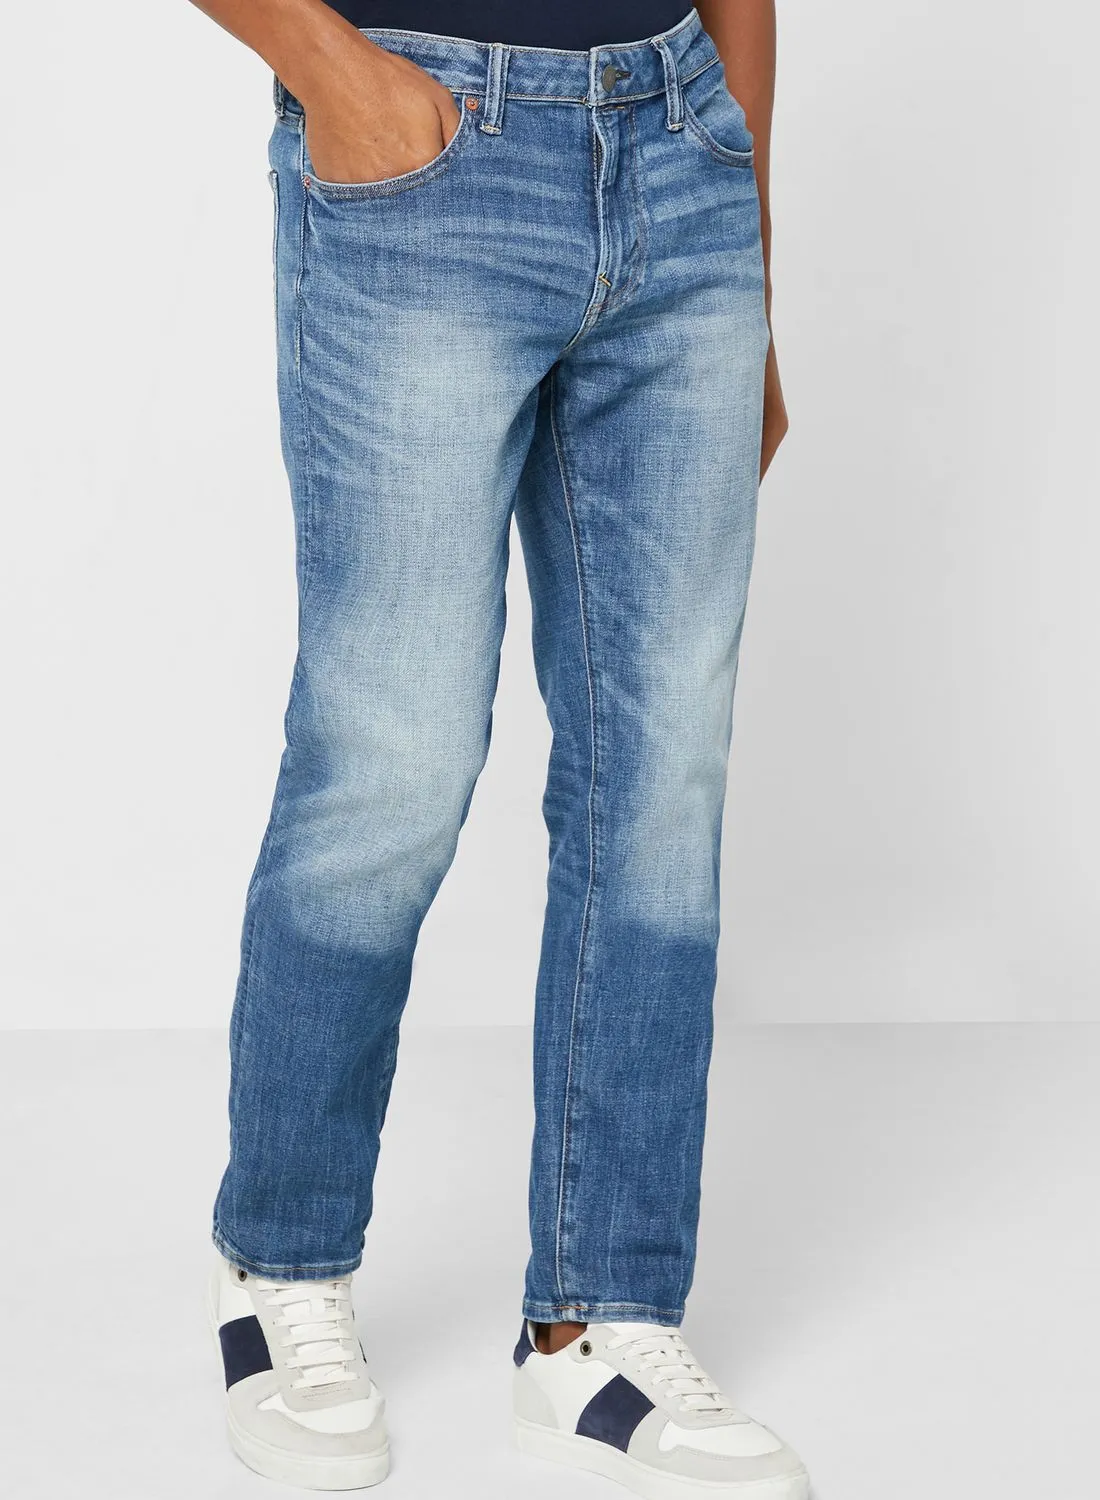 American Eagle Dark Wash Slim Fit Jeans